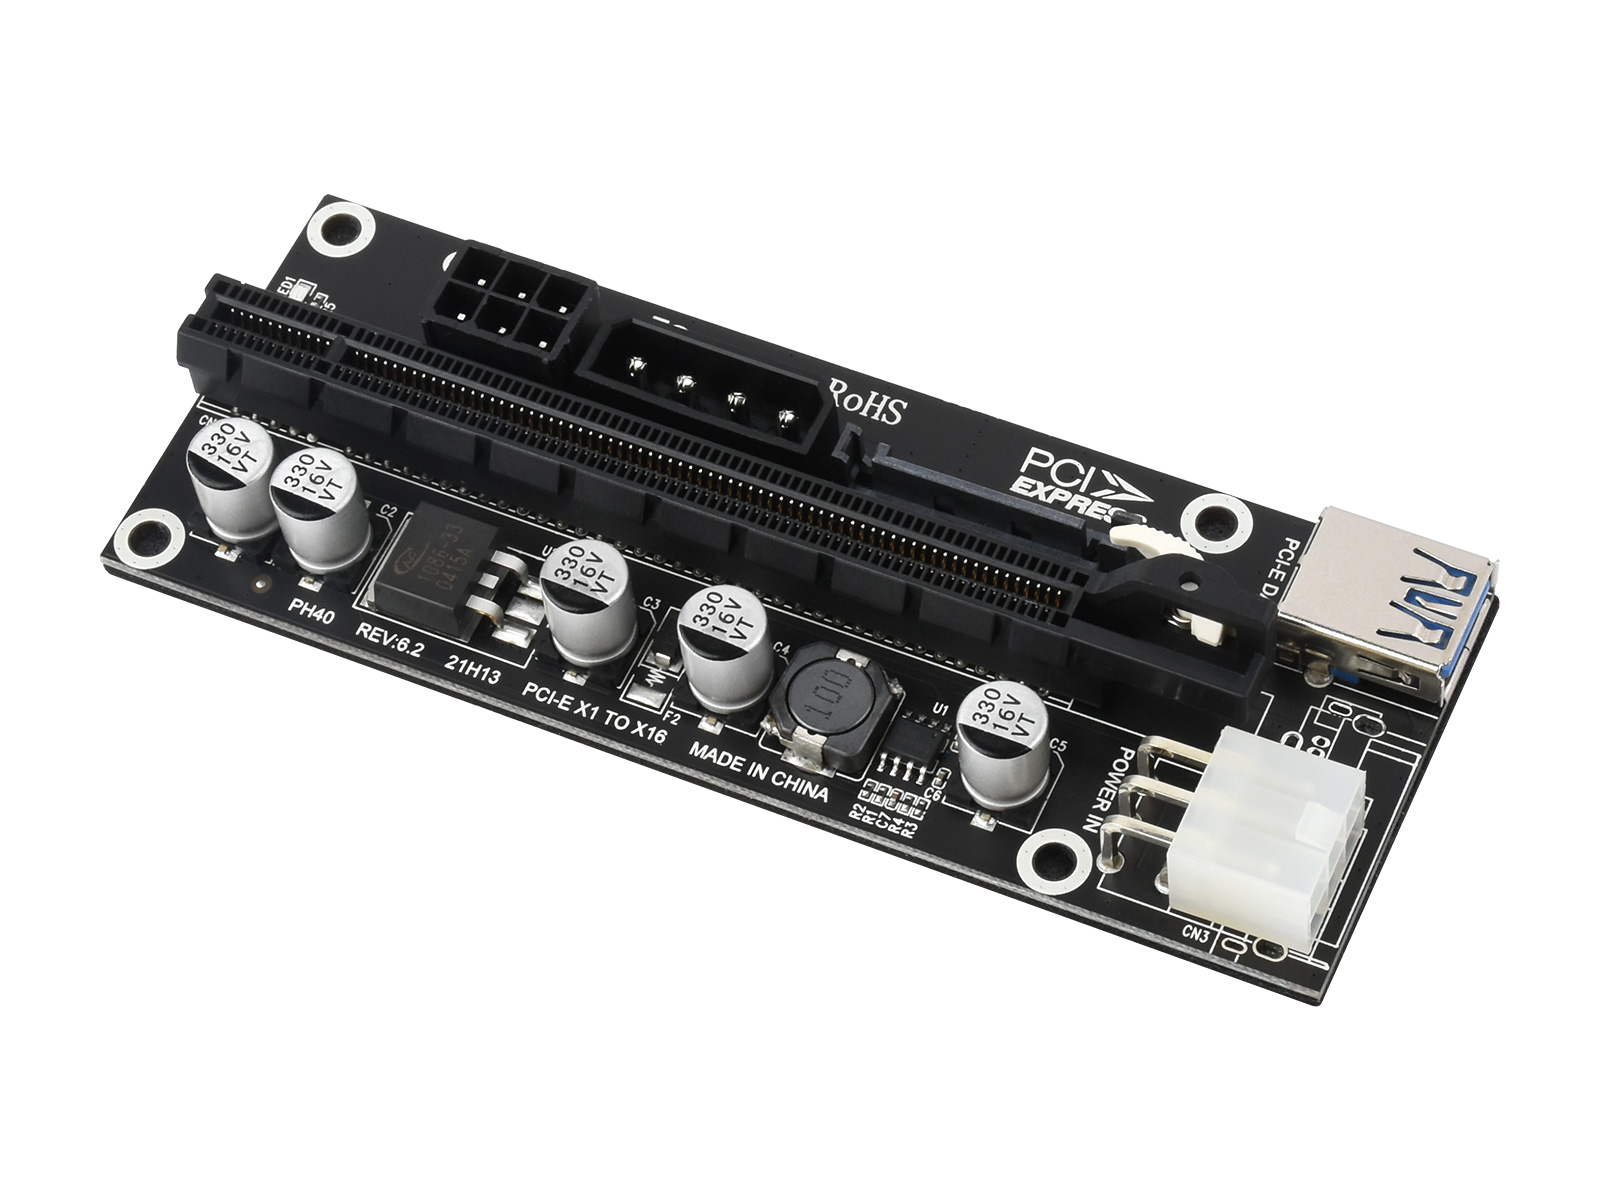 PCIe X1 转 X16 扩展卡 适合搭配 M.2 转 PCIe 4 口扩展卡使用